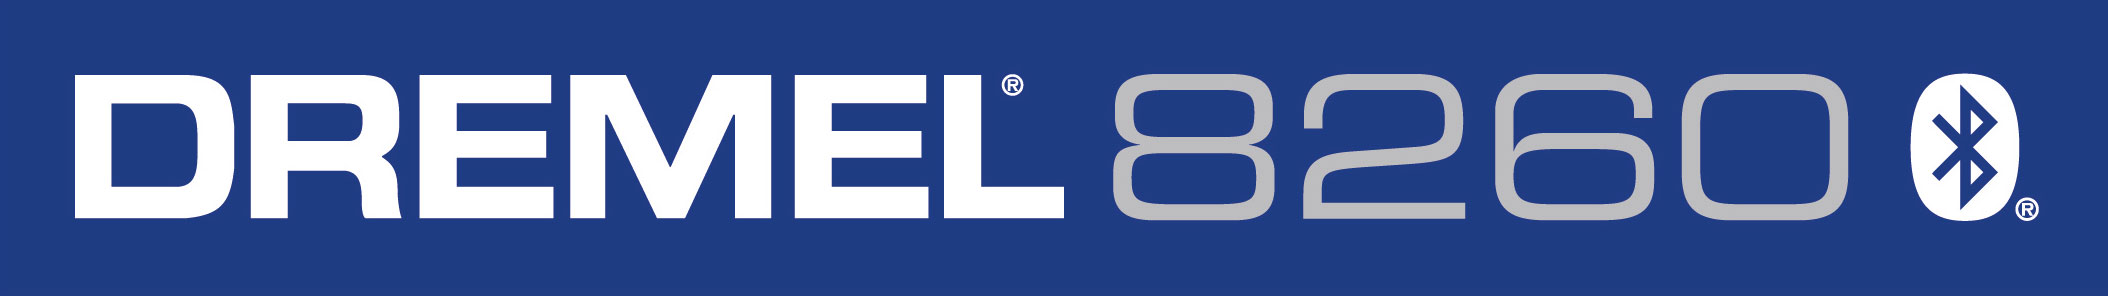 Dremel 8260 Logo